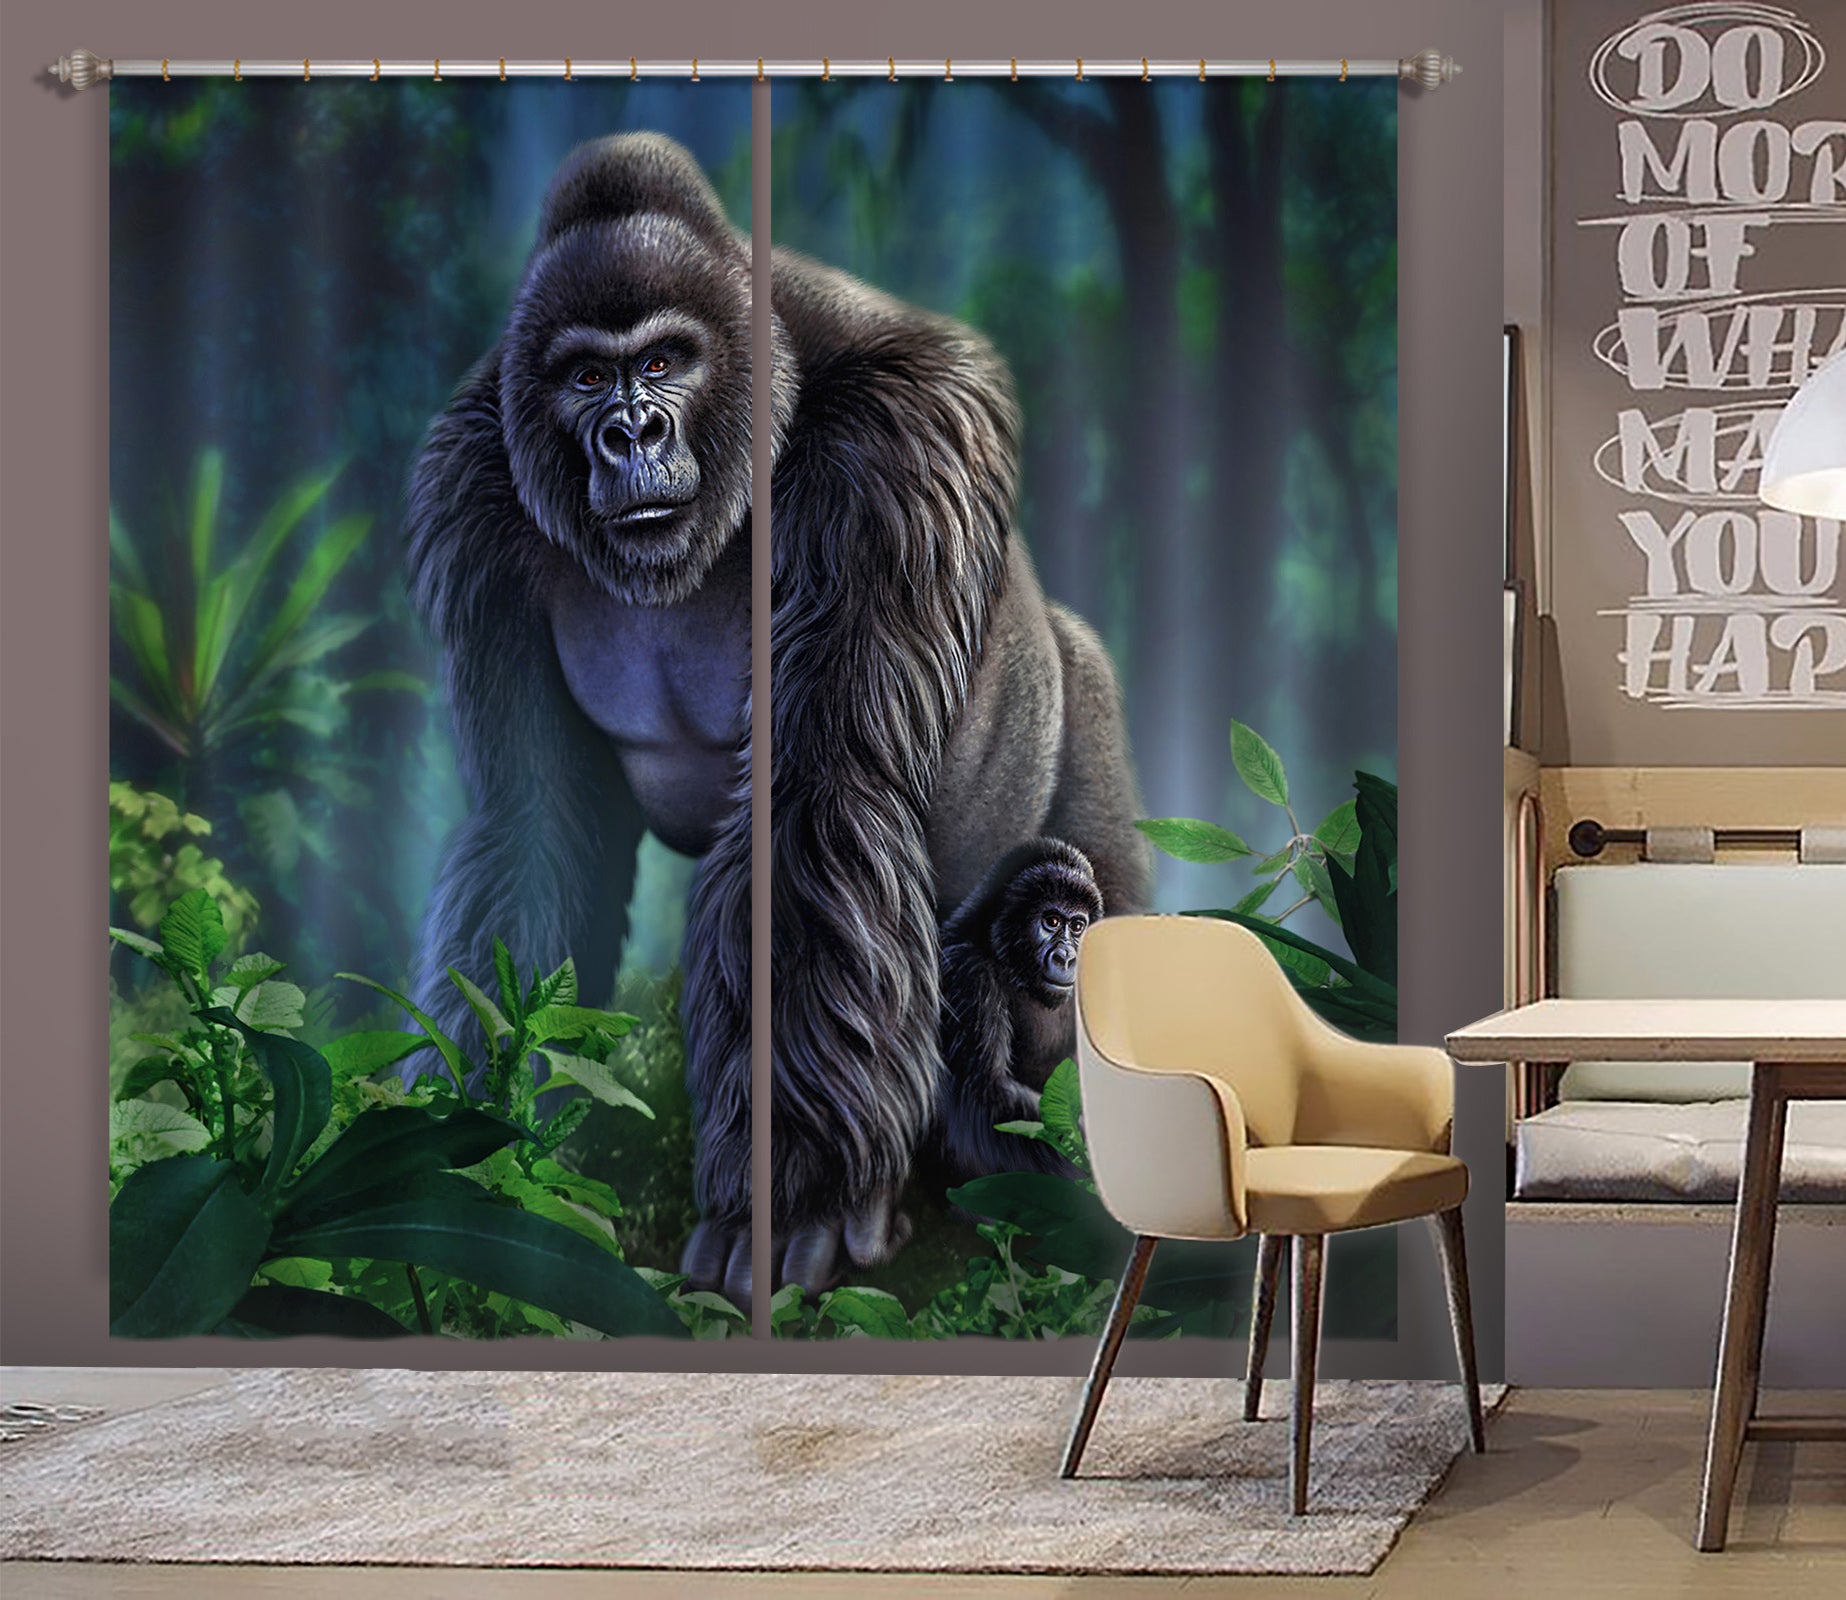 3D Gorilla 067 Jerry LoFaro Curtain Curtains Drapes